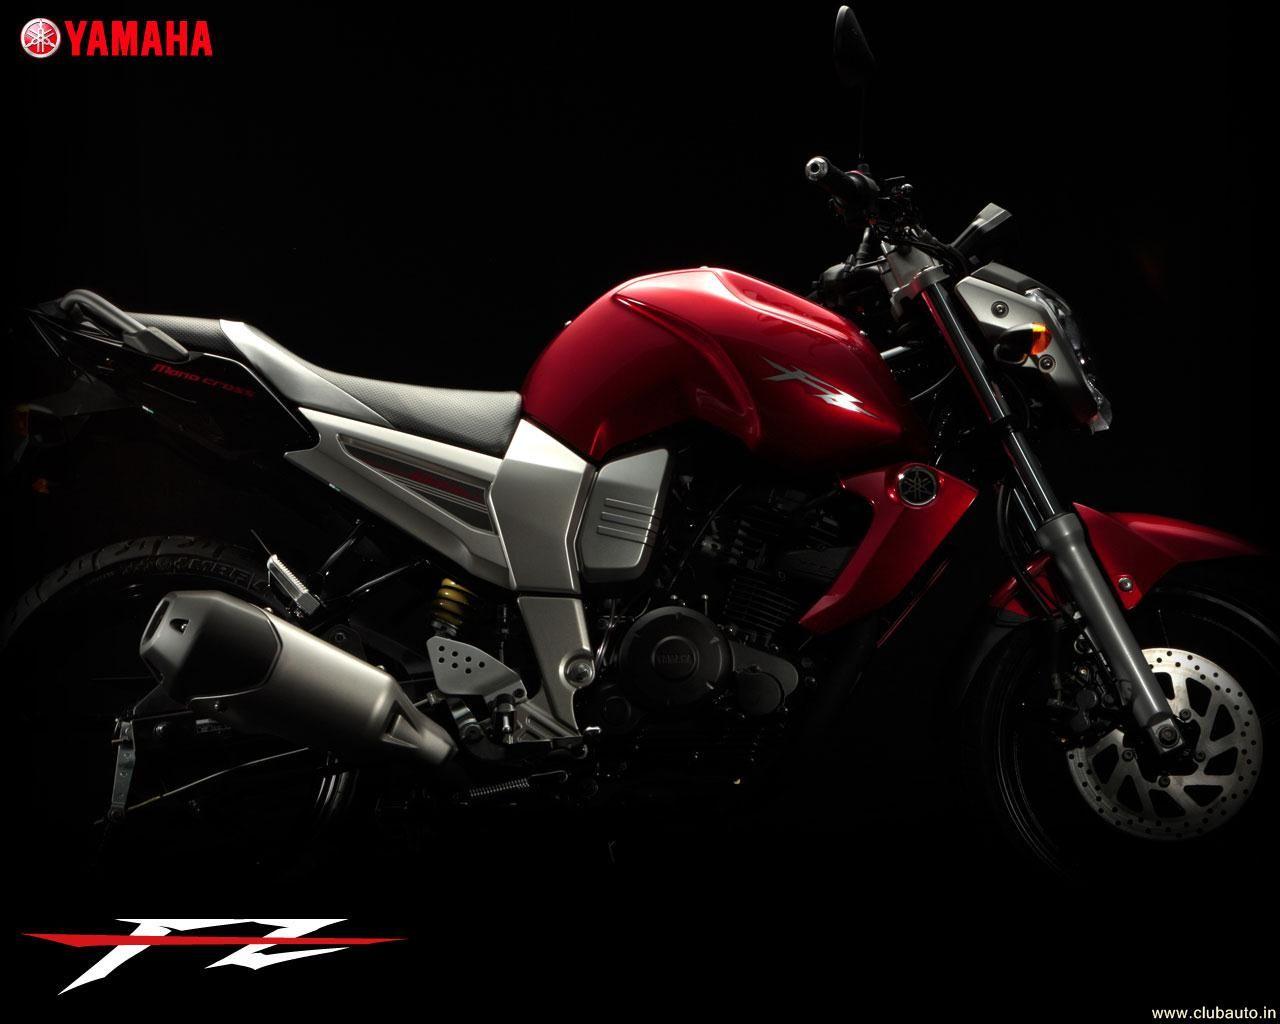 Wallpaper > Bikes > Yamaha > FZ16 > Yamaha FZ16 high quality! Free